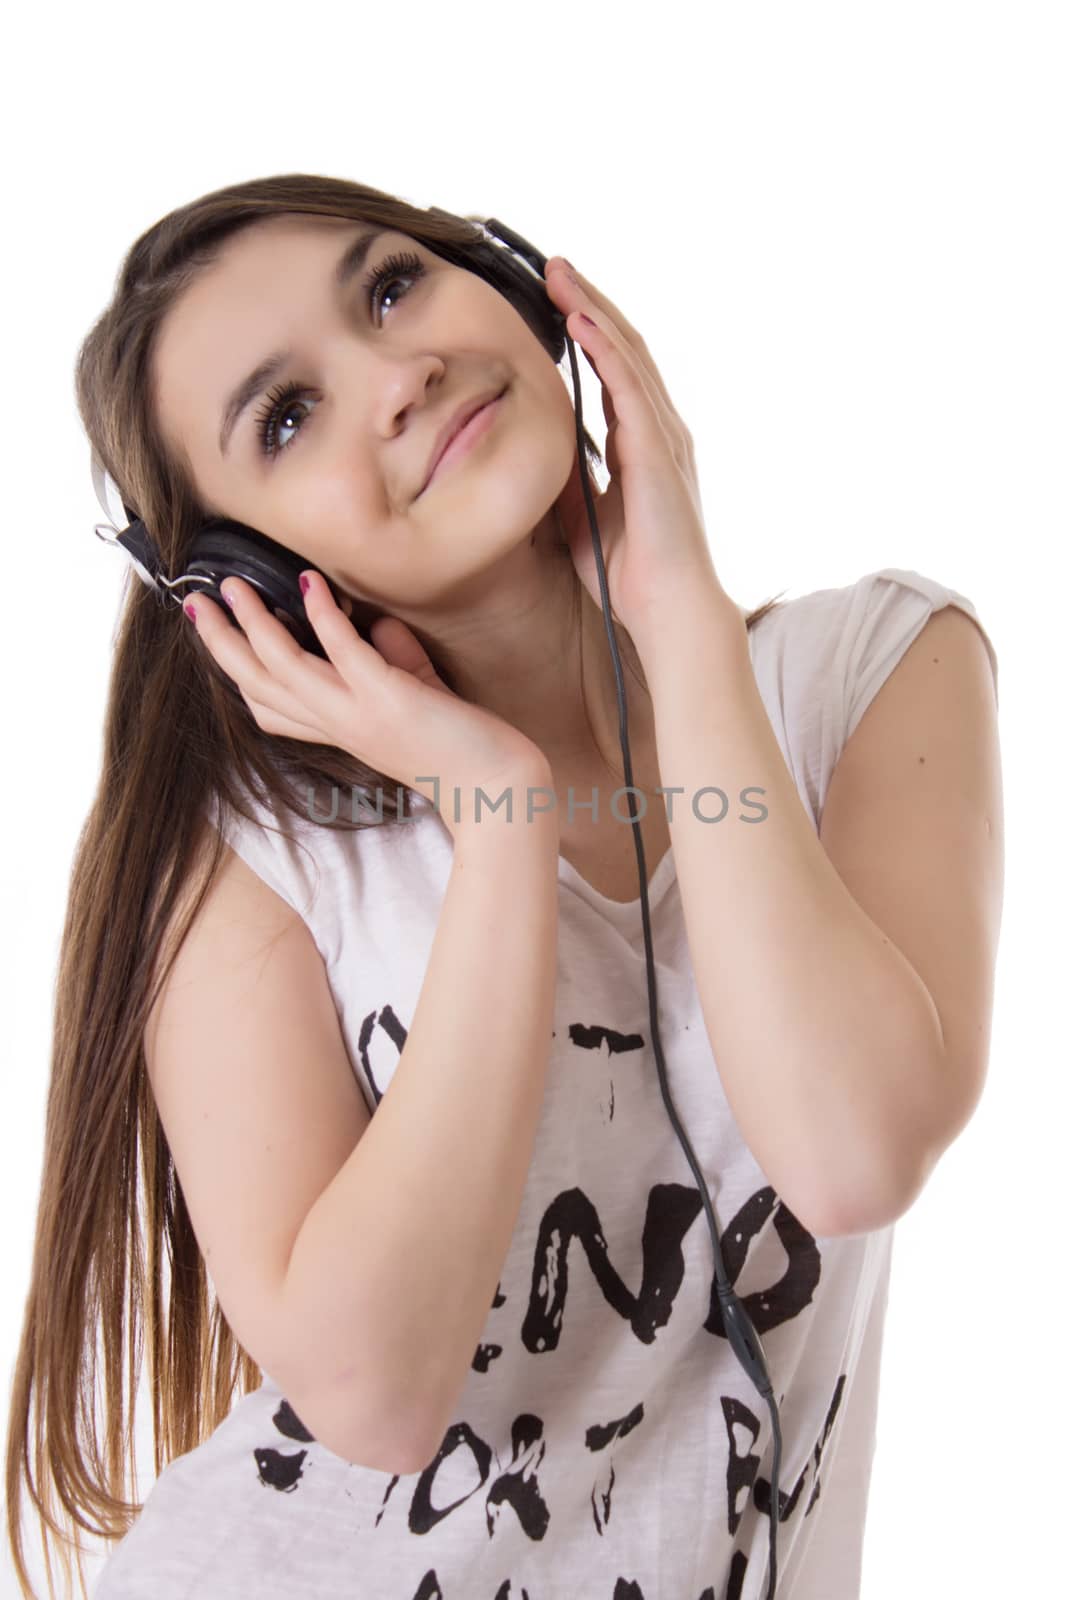 Joyful teen girl with headphones listens to the music by Angel_a